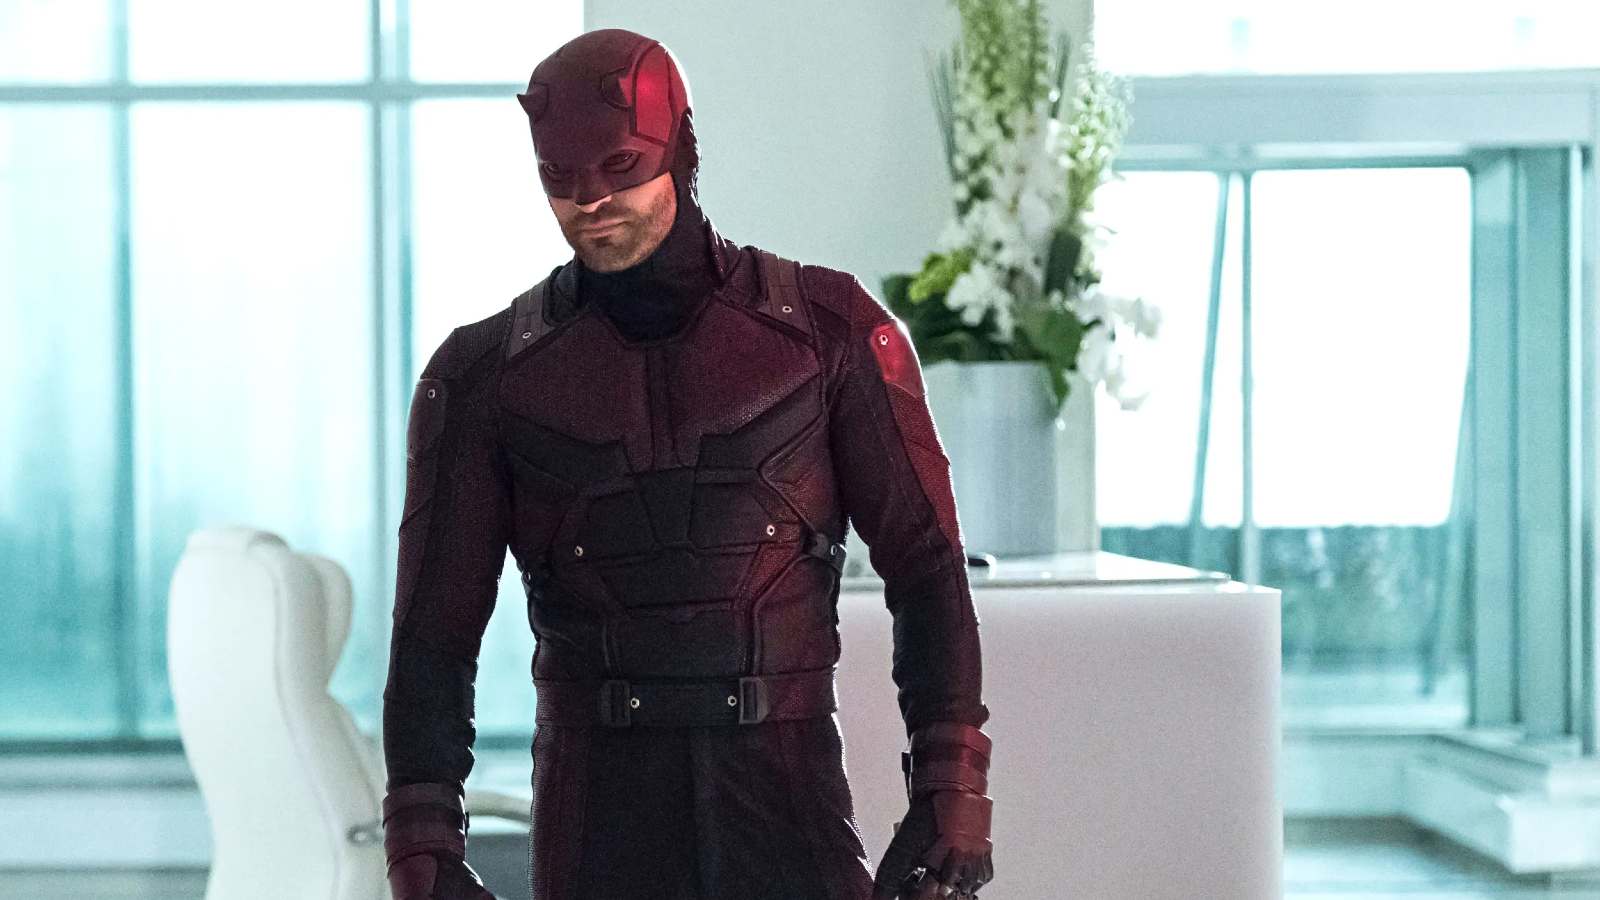 ‘Daredevil’ showrunner isn’t a big fan of releasing full seasons at once